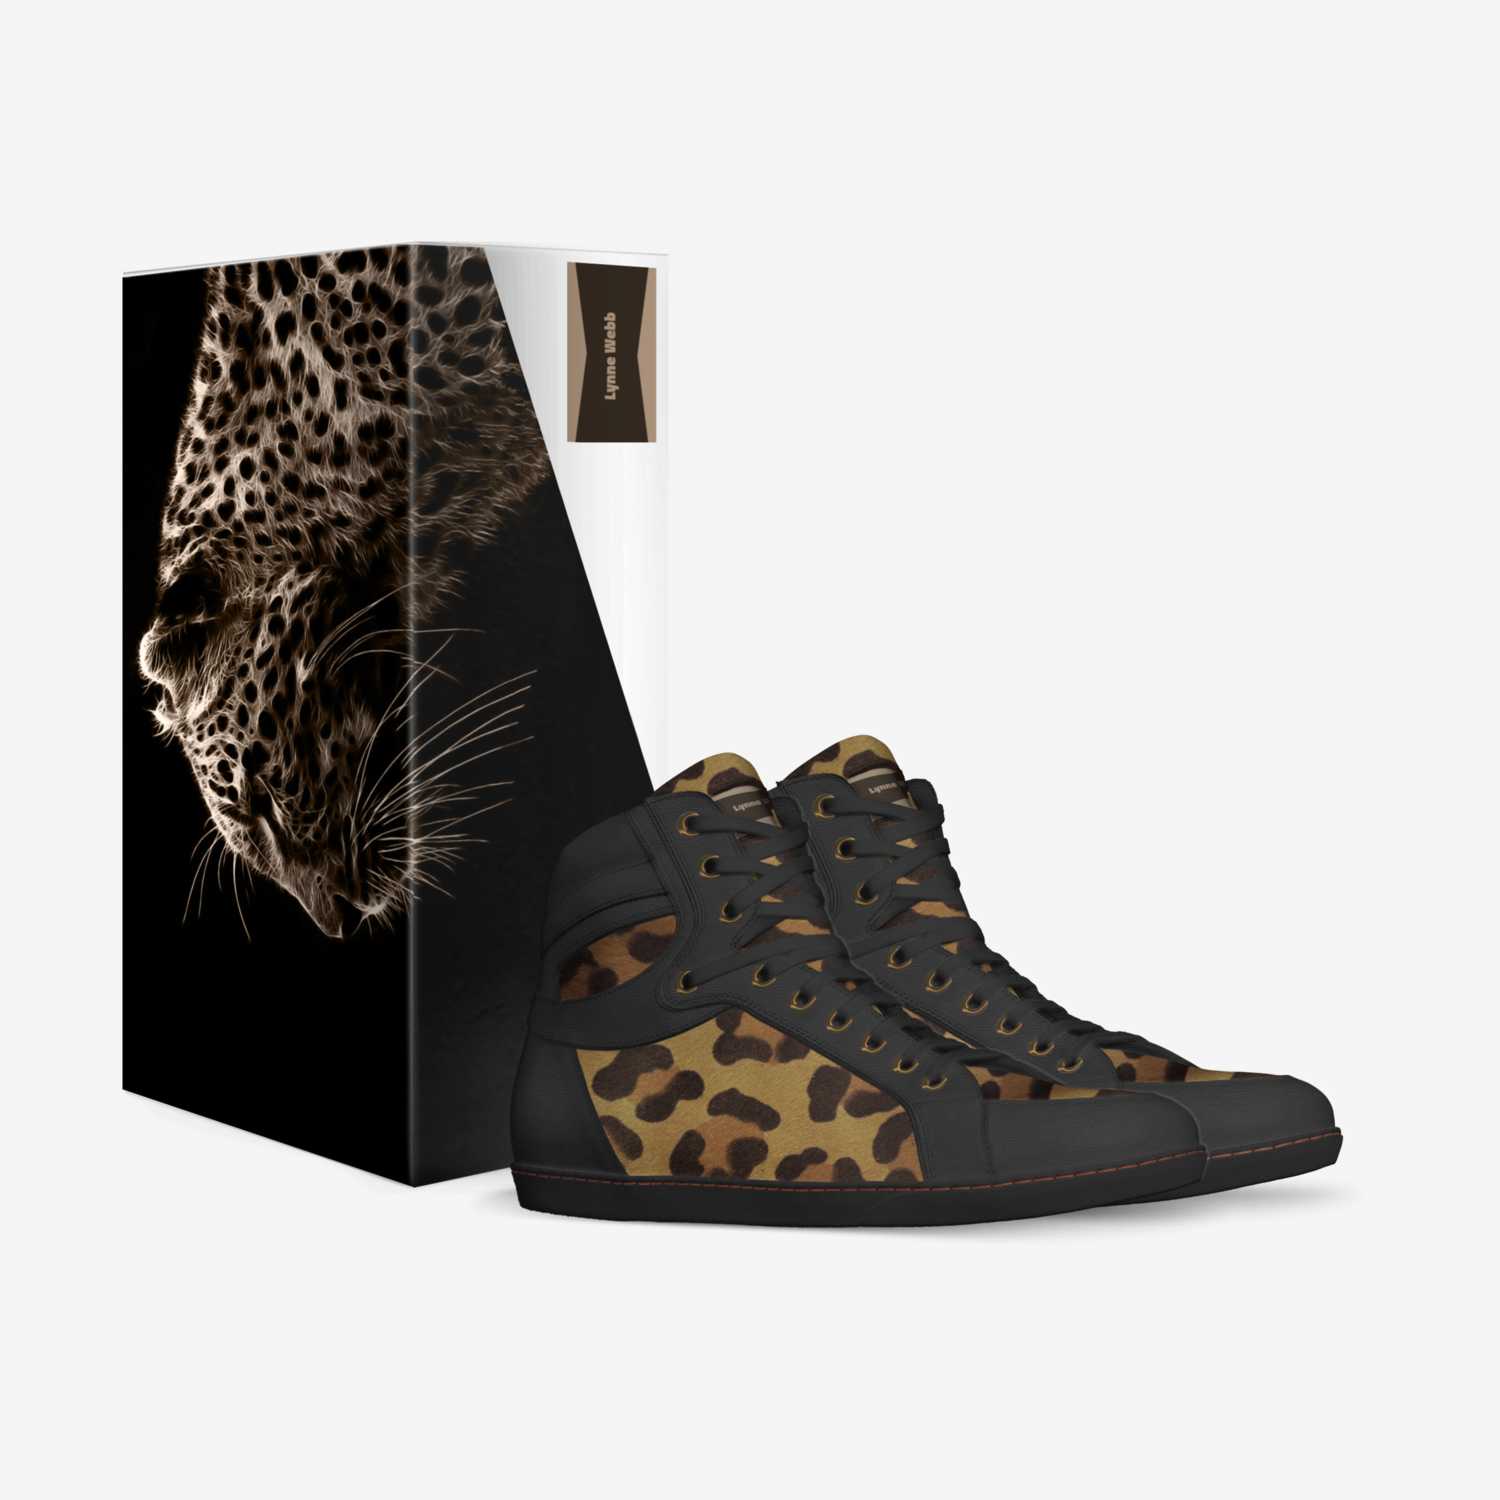 Lynne Webb  custom made in Italy shoes by Lynne Webb | Box view